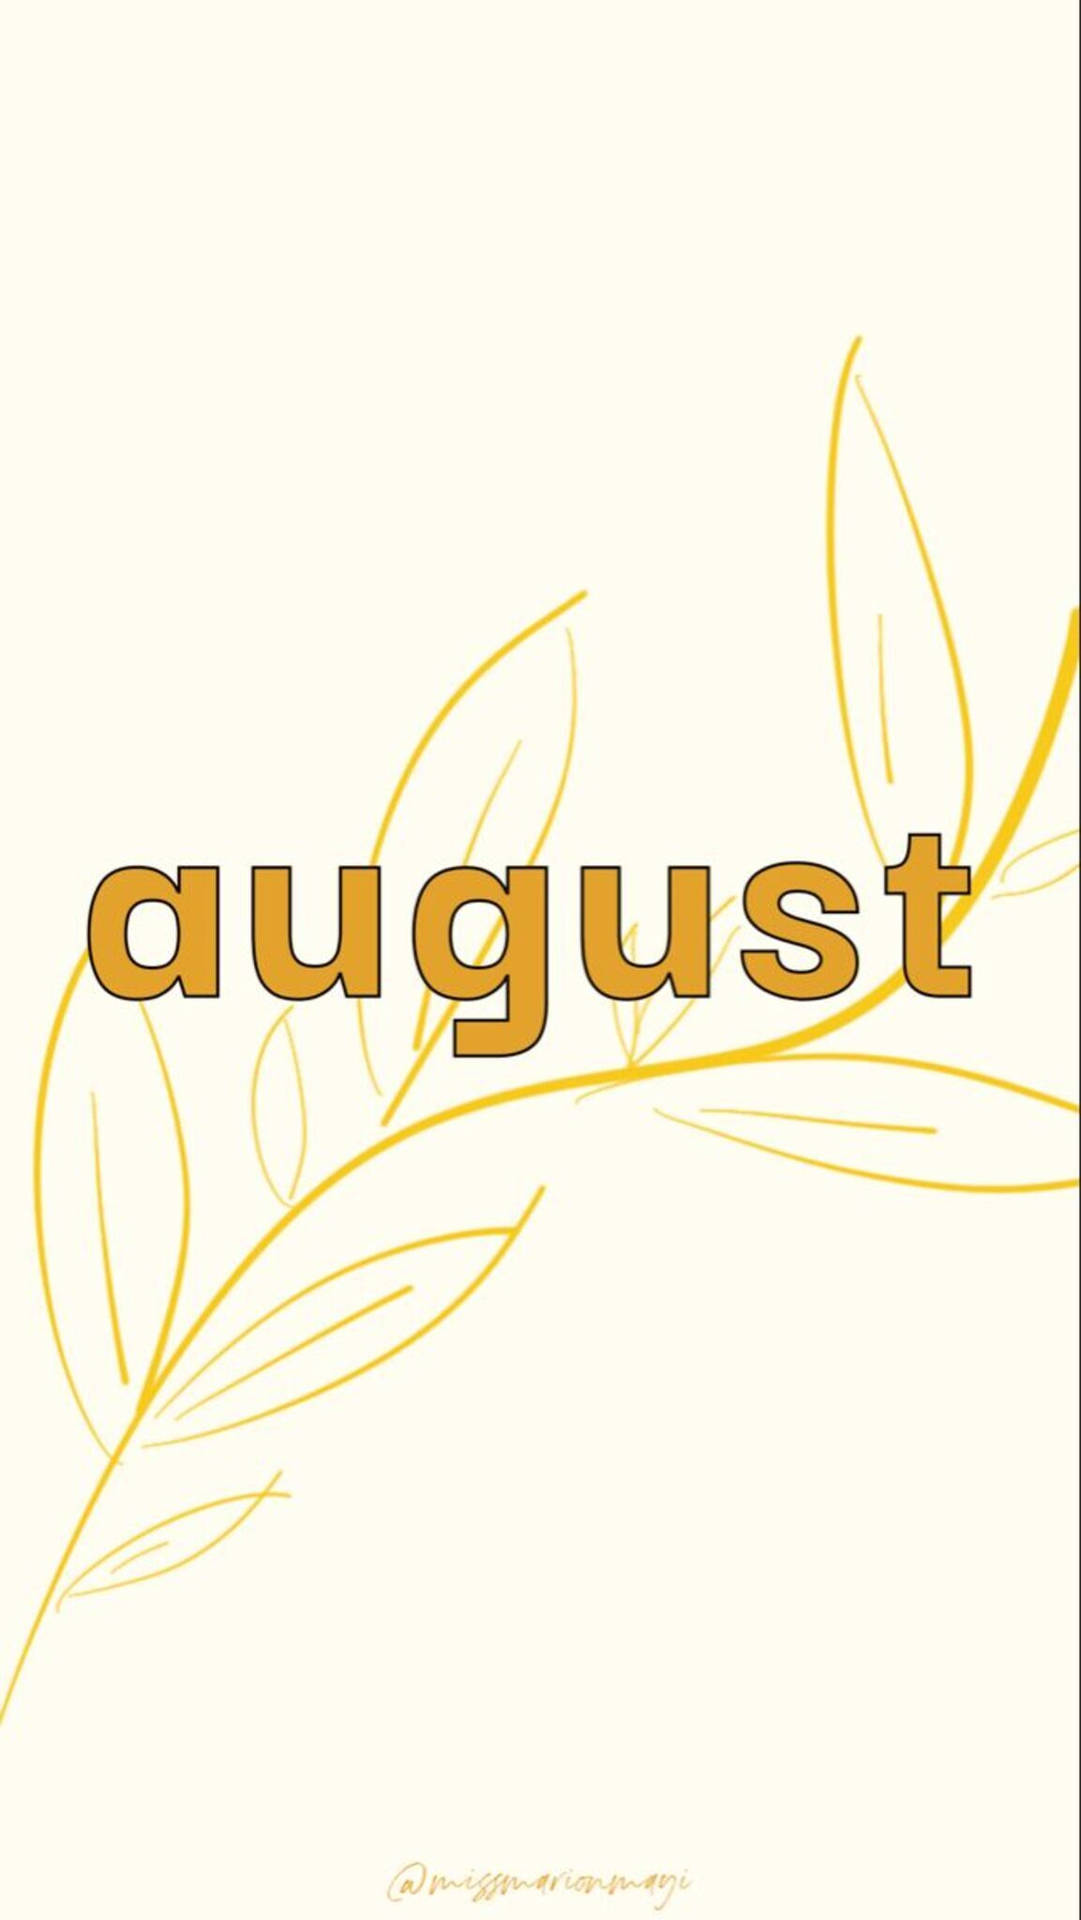 The golden hue of August Wallpaper